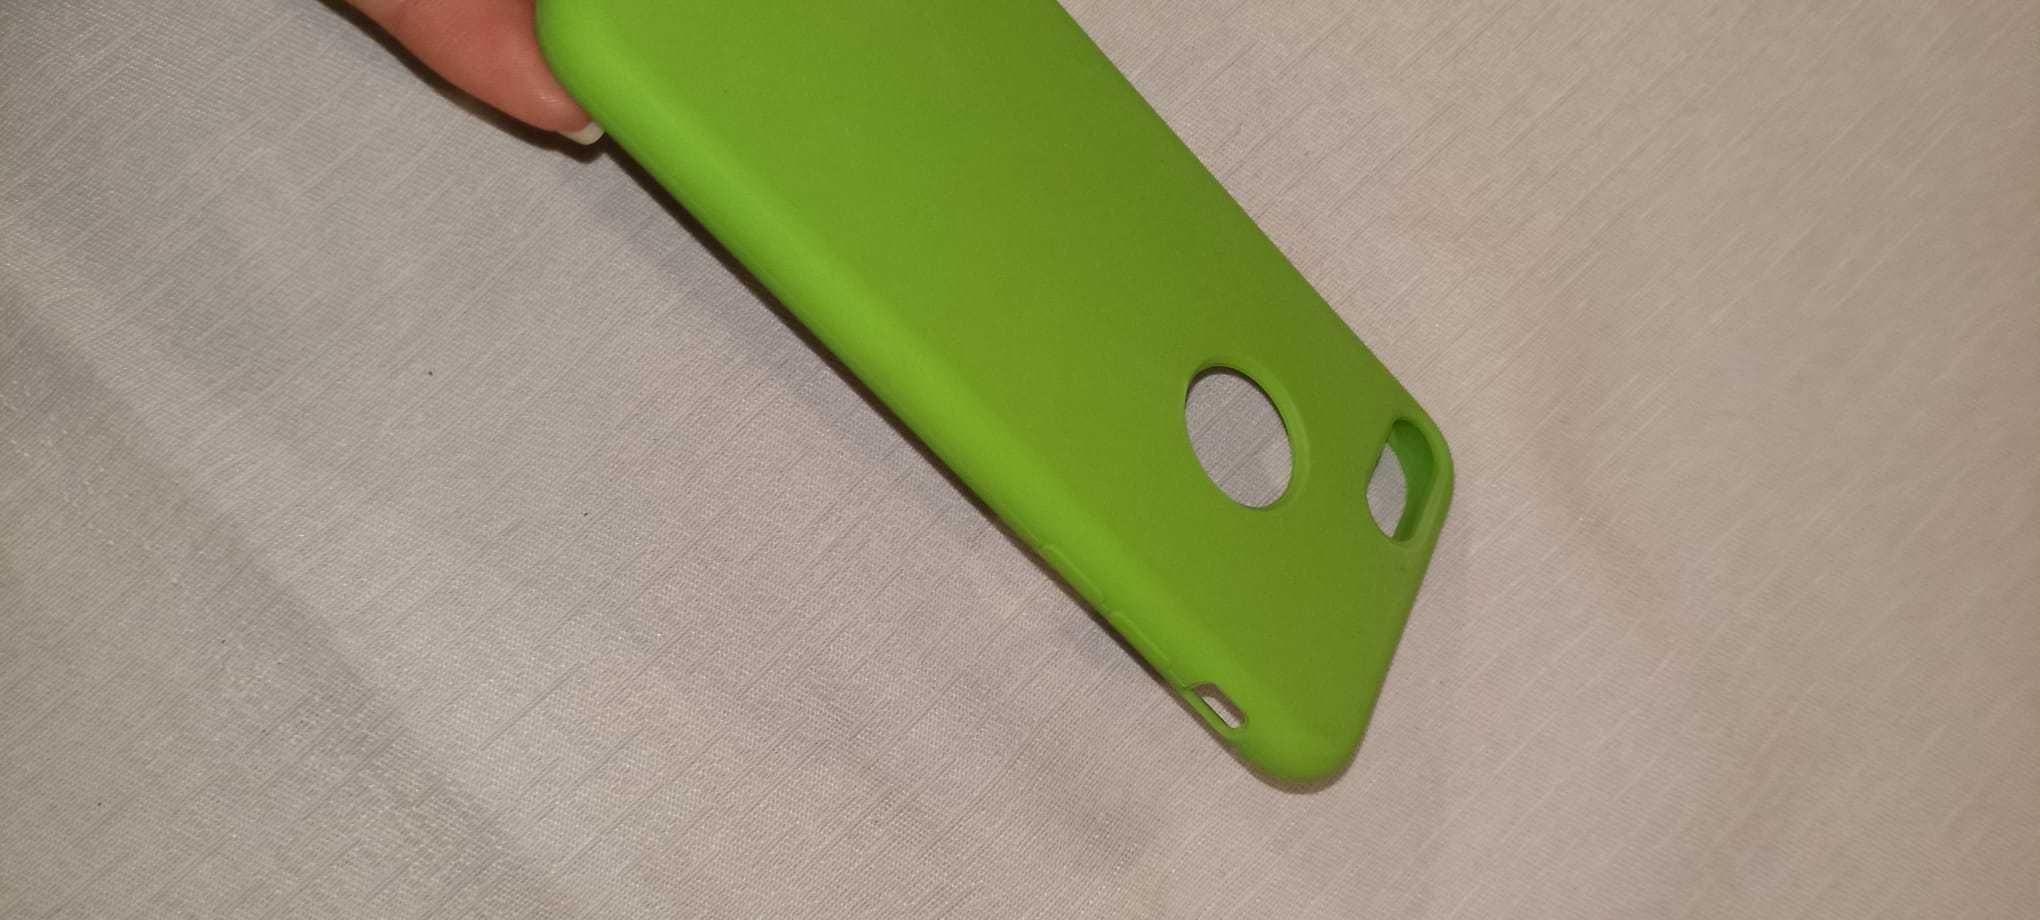 Capa verde iPhone SE 2020 ou iPhone 7